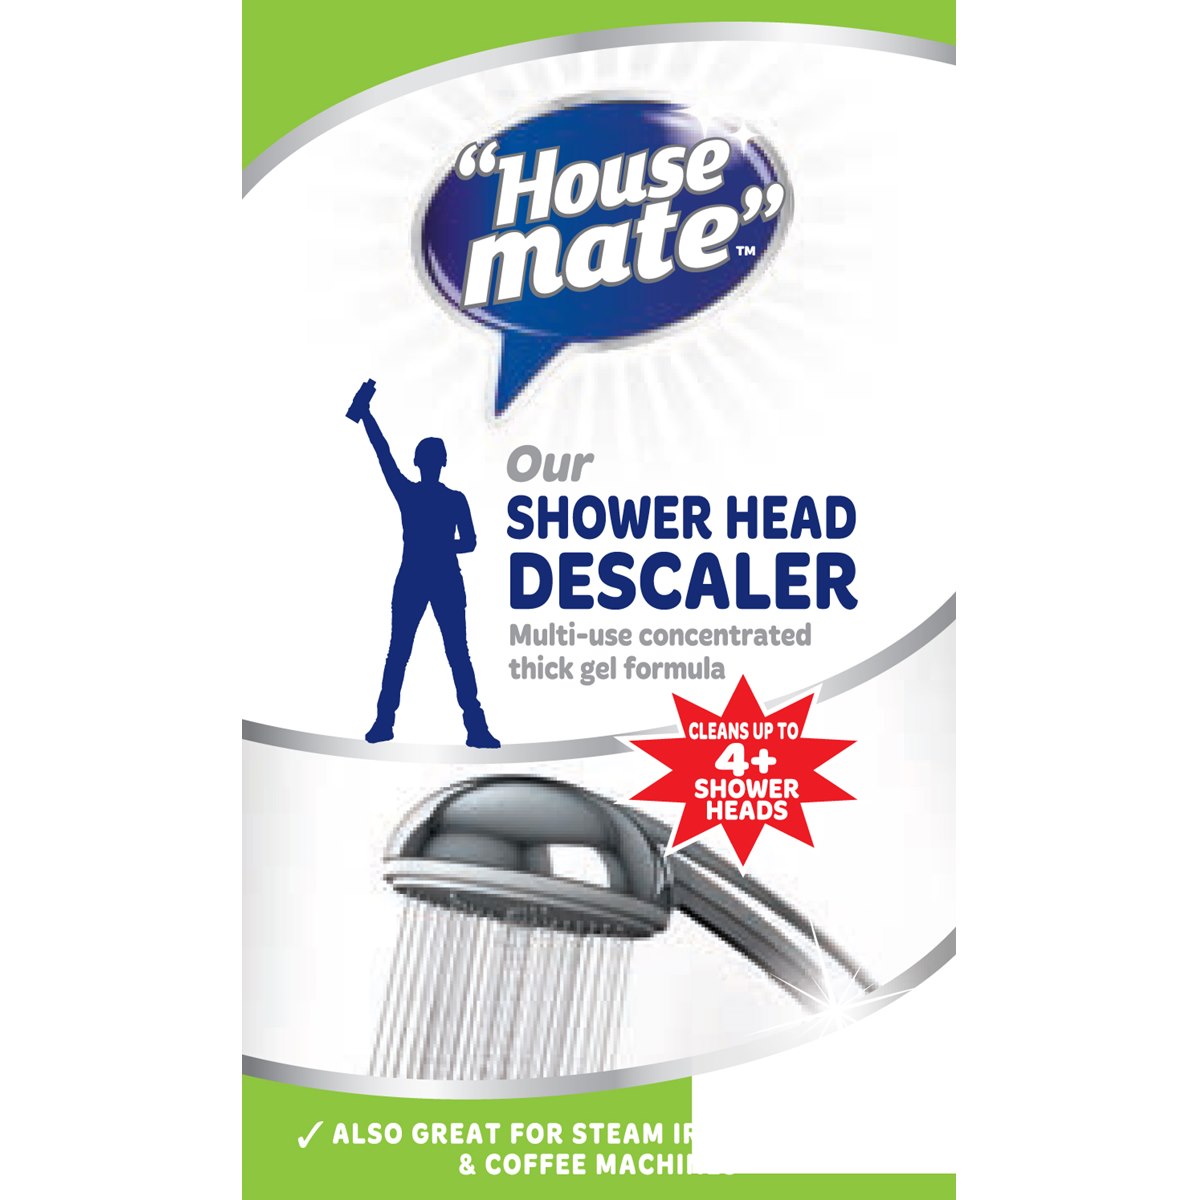 How to Descaler a Shower Head